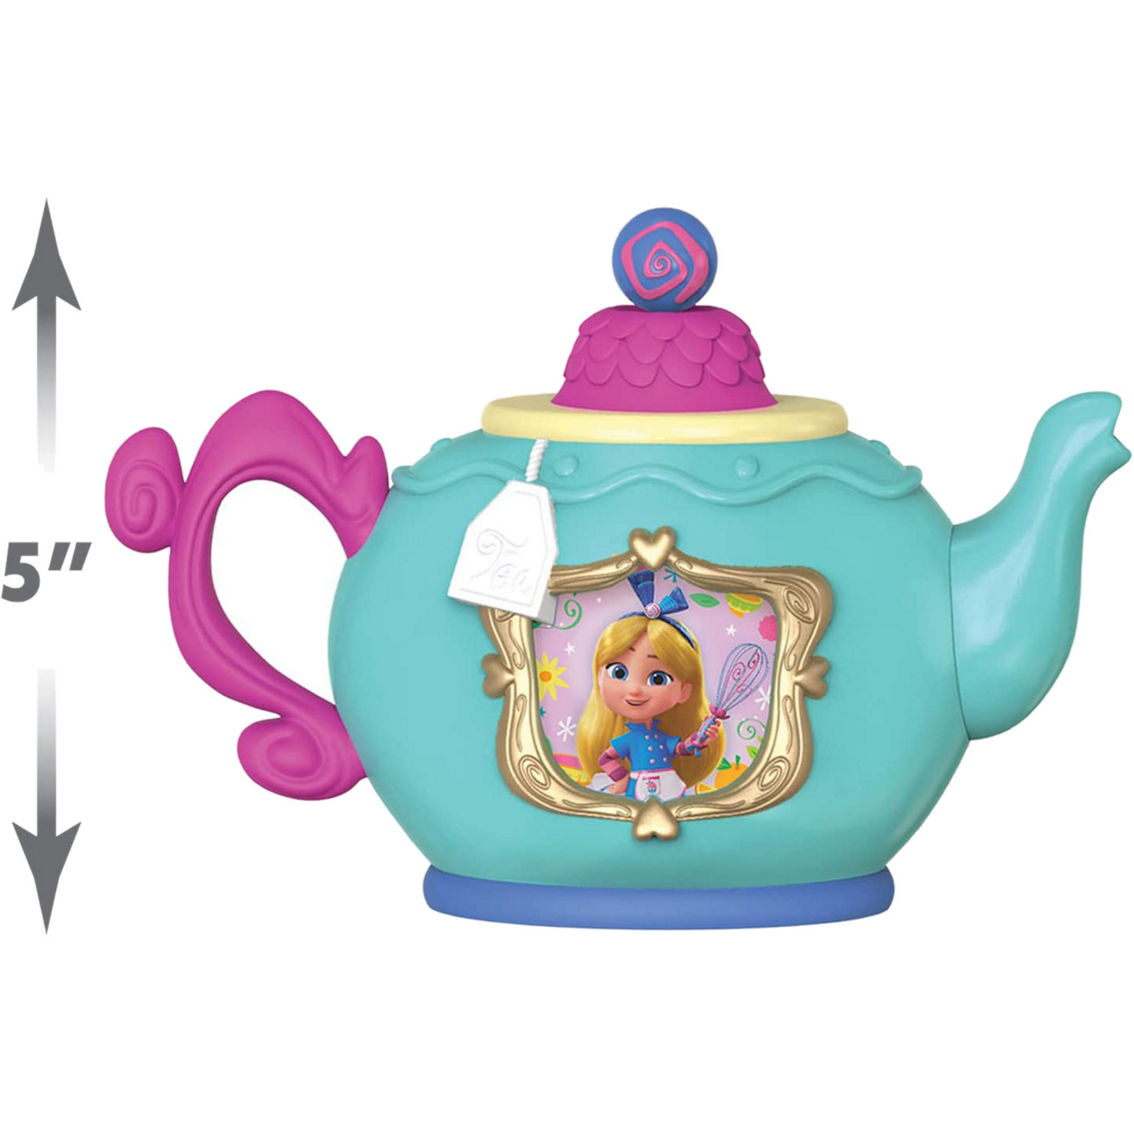 Disney Junior Alice's Wonderland Bakery Tea Party Set - Image 3 of 4